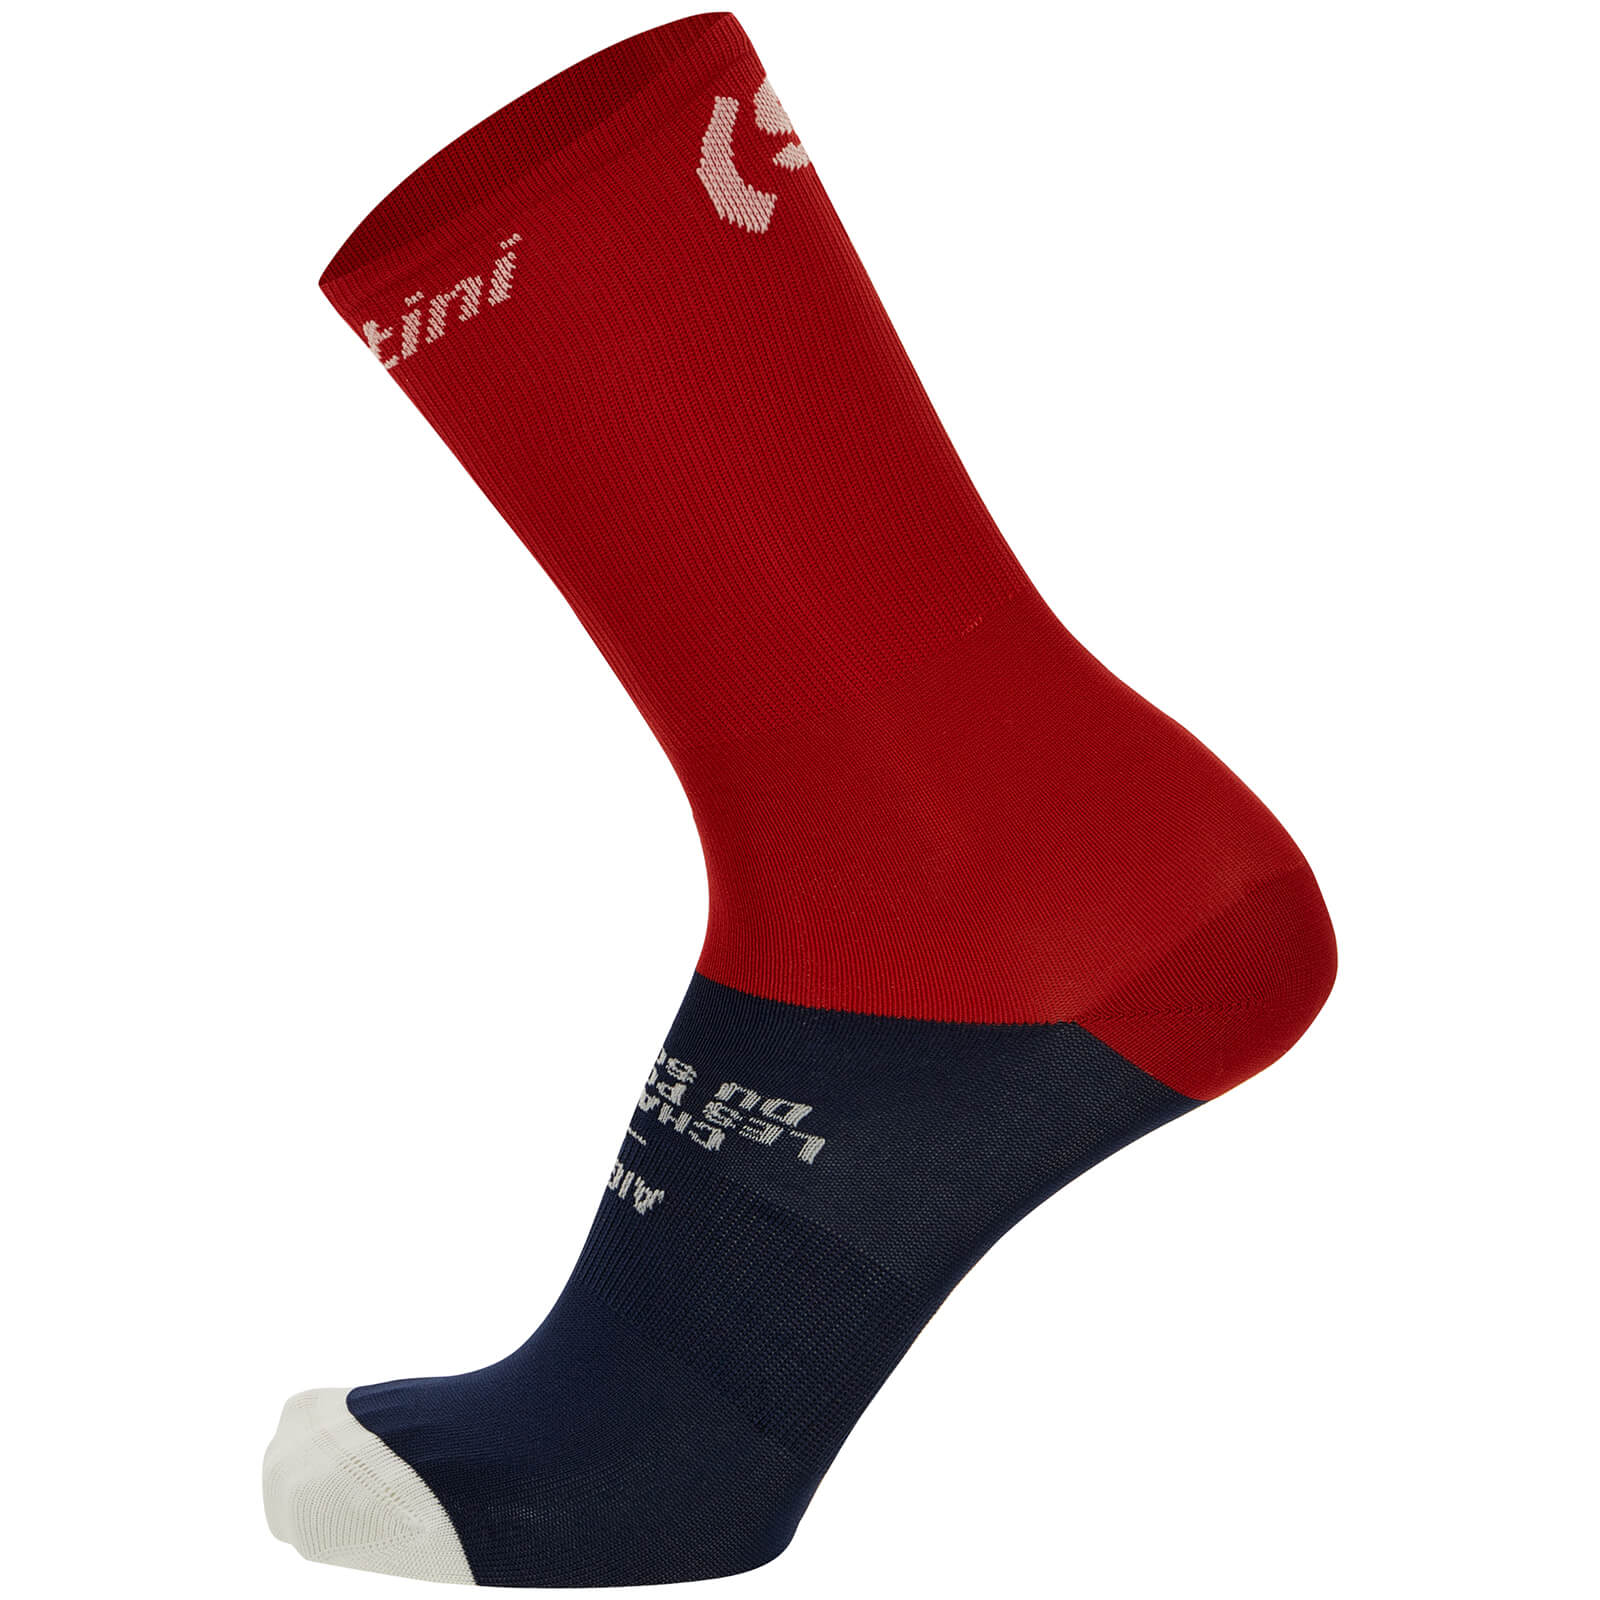 Santini Tour de France Aigle Stage Socks - XS